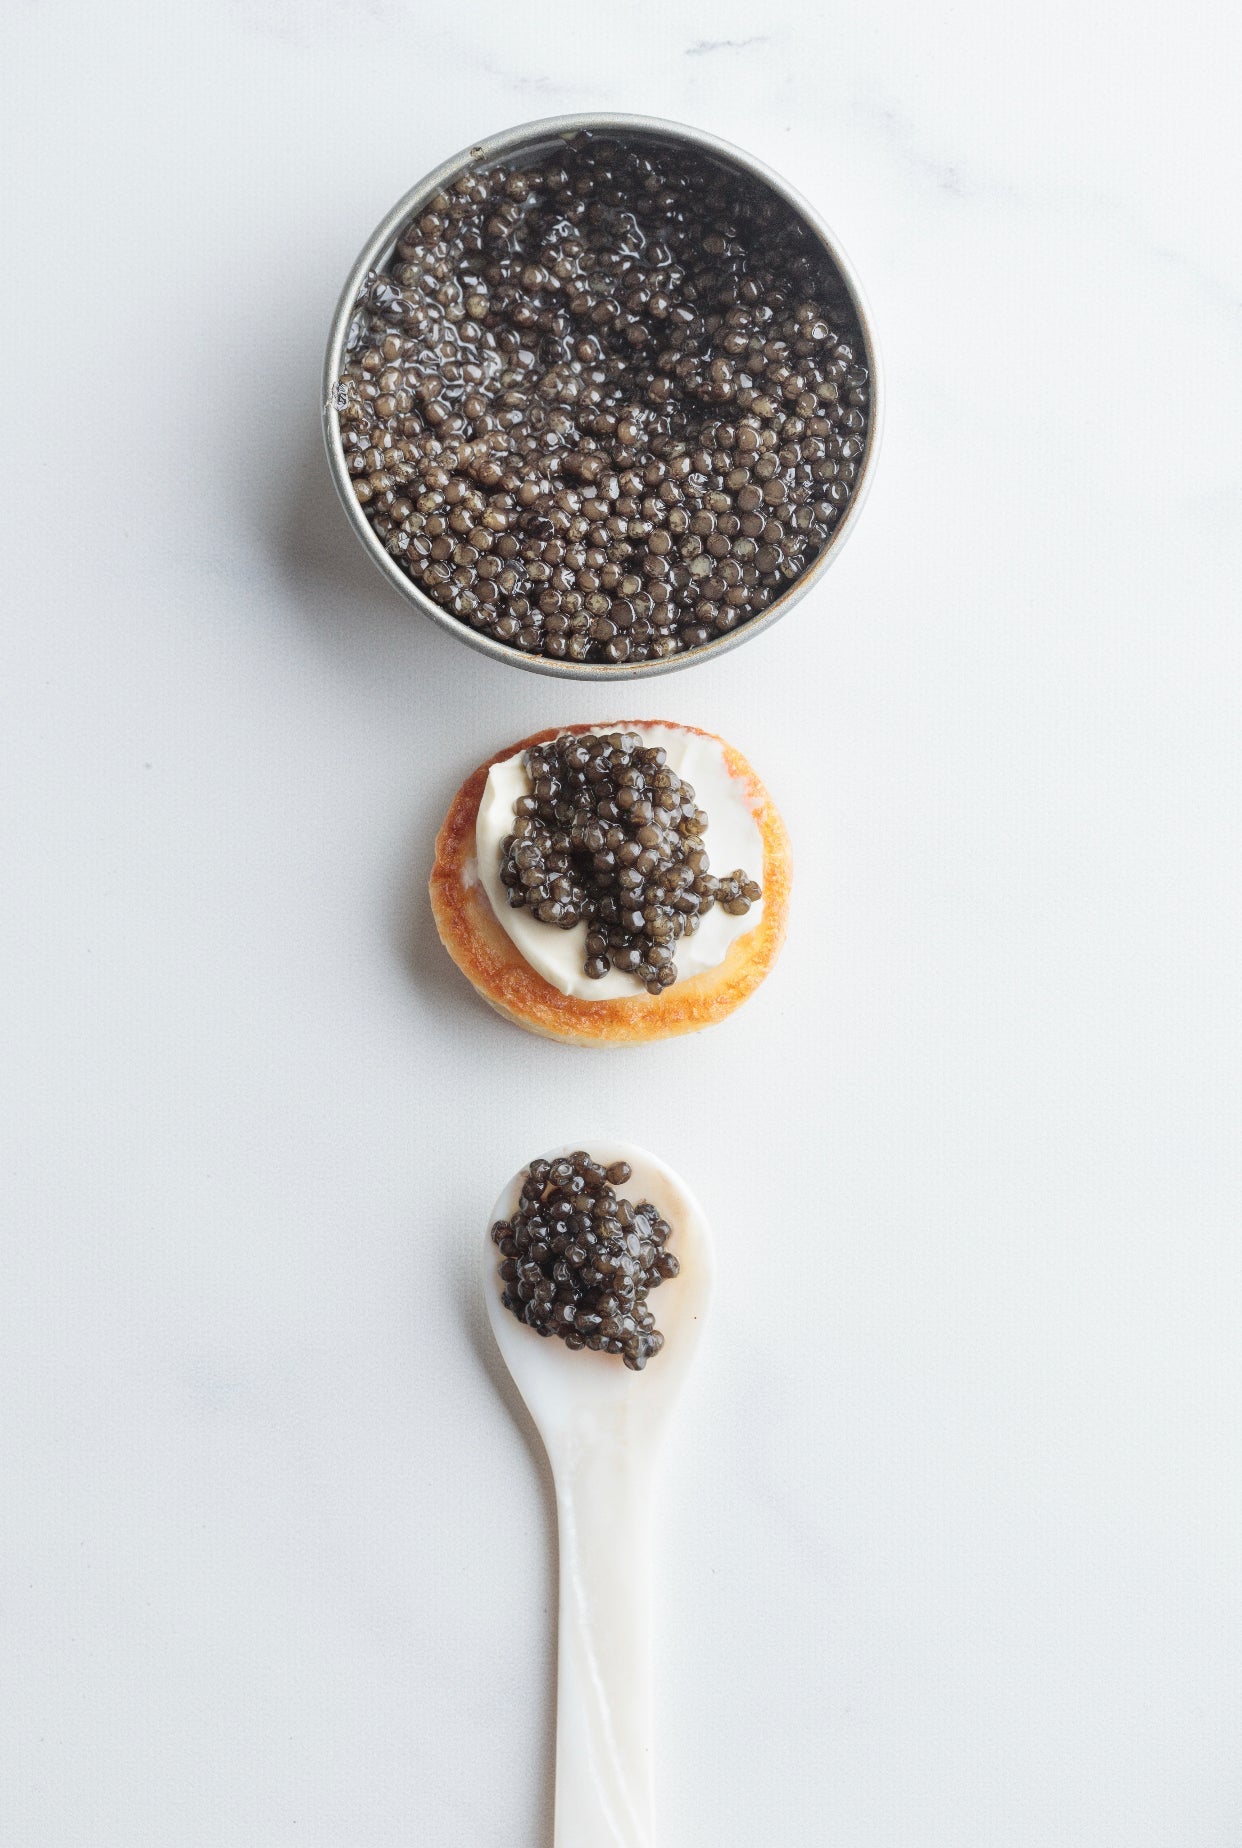 500g Royal Beluga XX Caviar